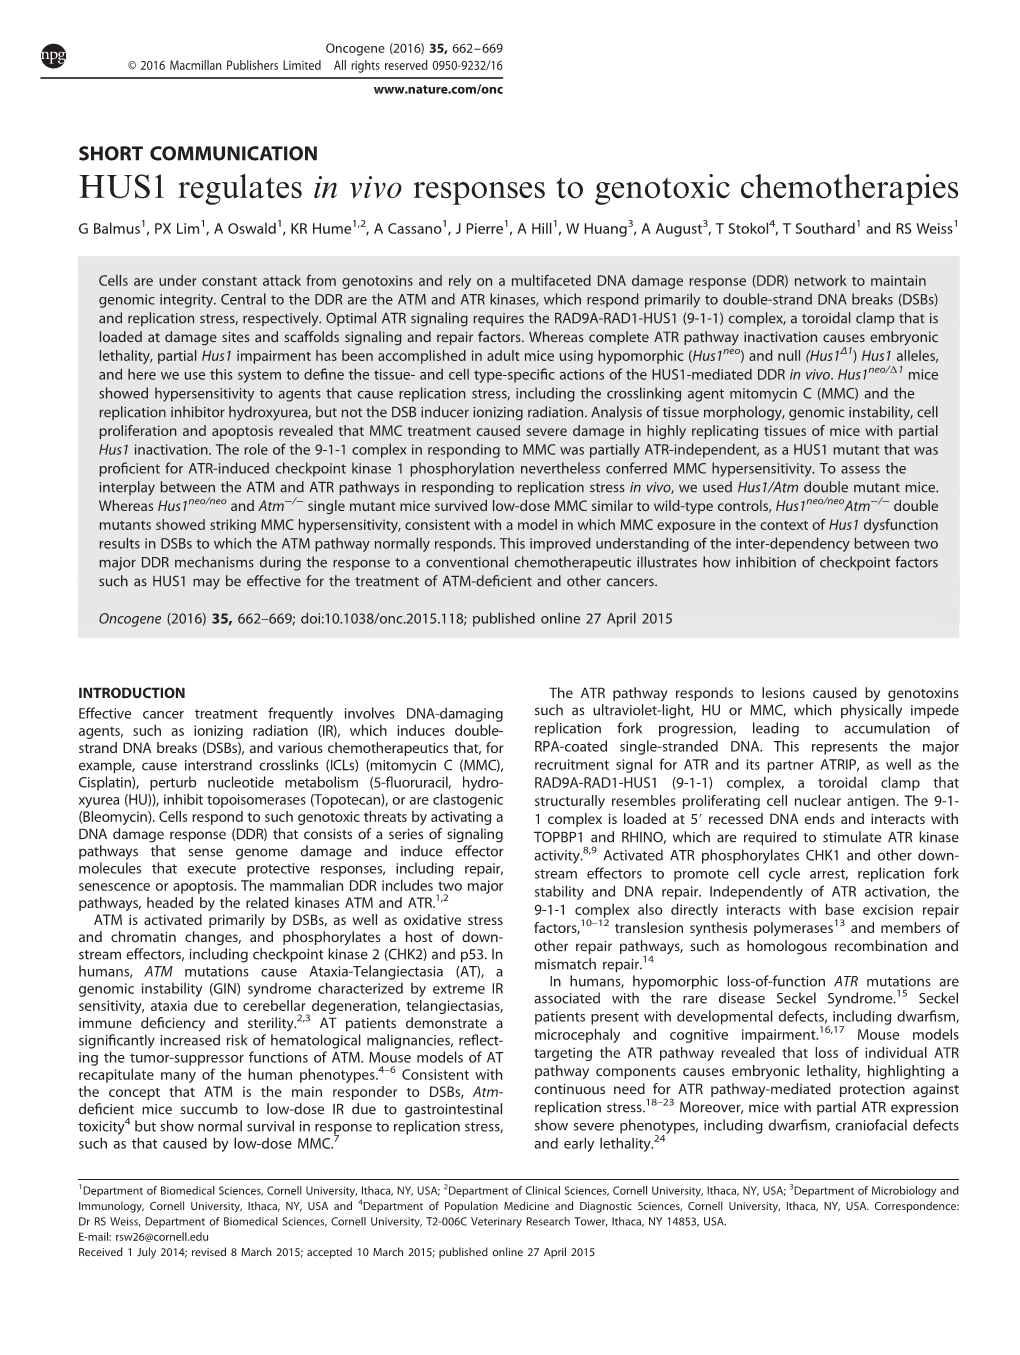 HUS1 Regulates in Vivo Responses to Genotoxic Chemotherapies